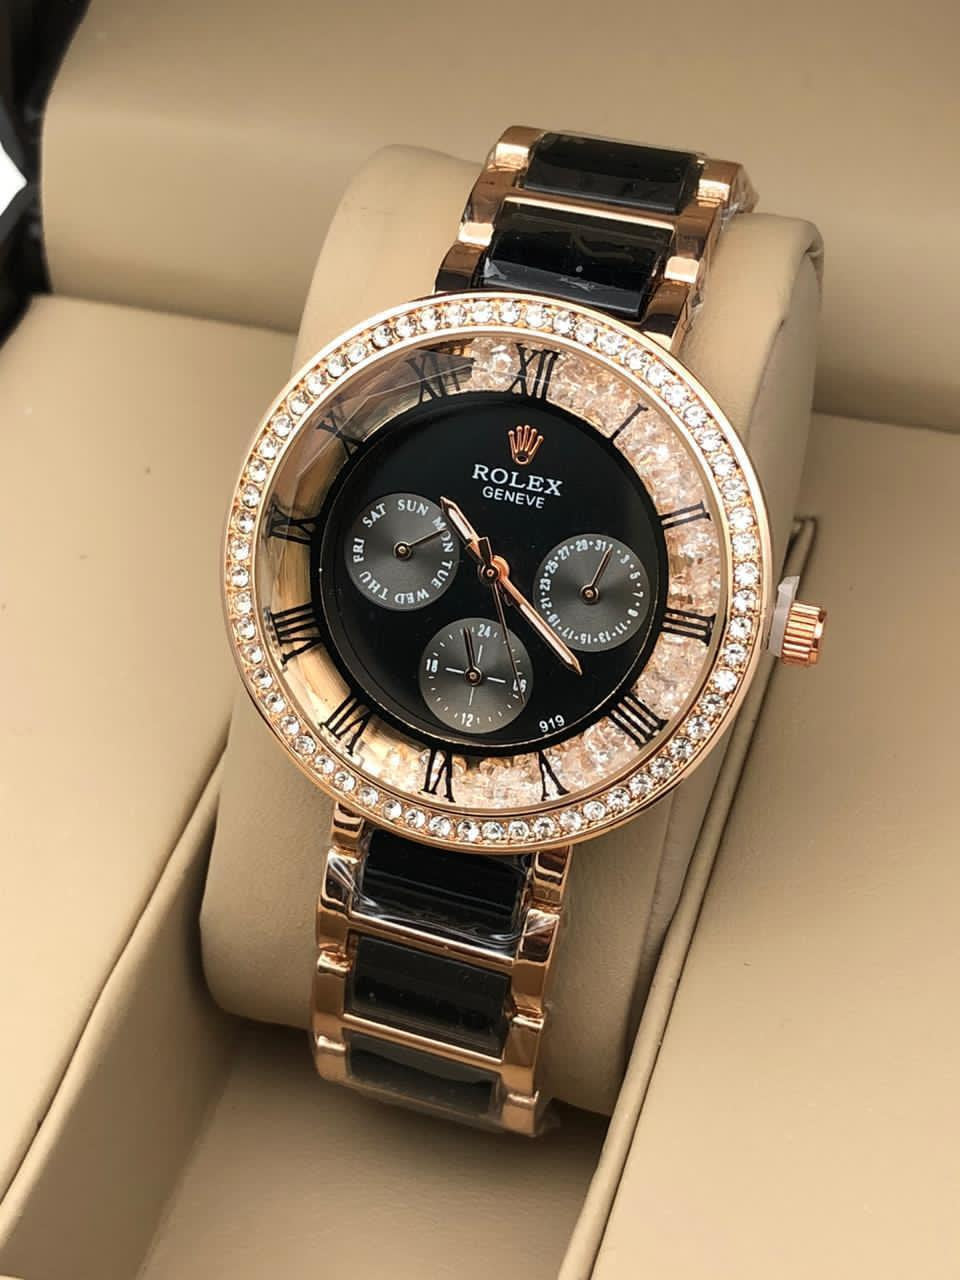 Stunning Black Diamond Studded Rolex Watch For Women